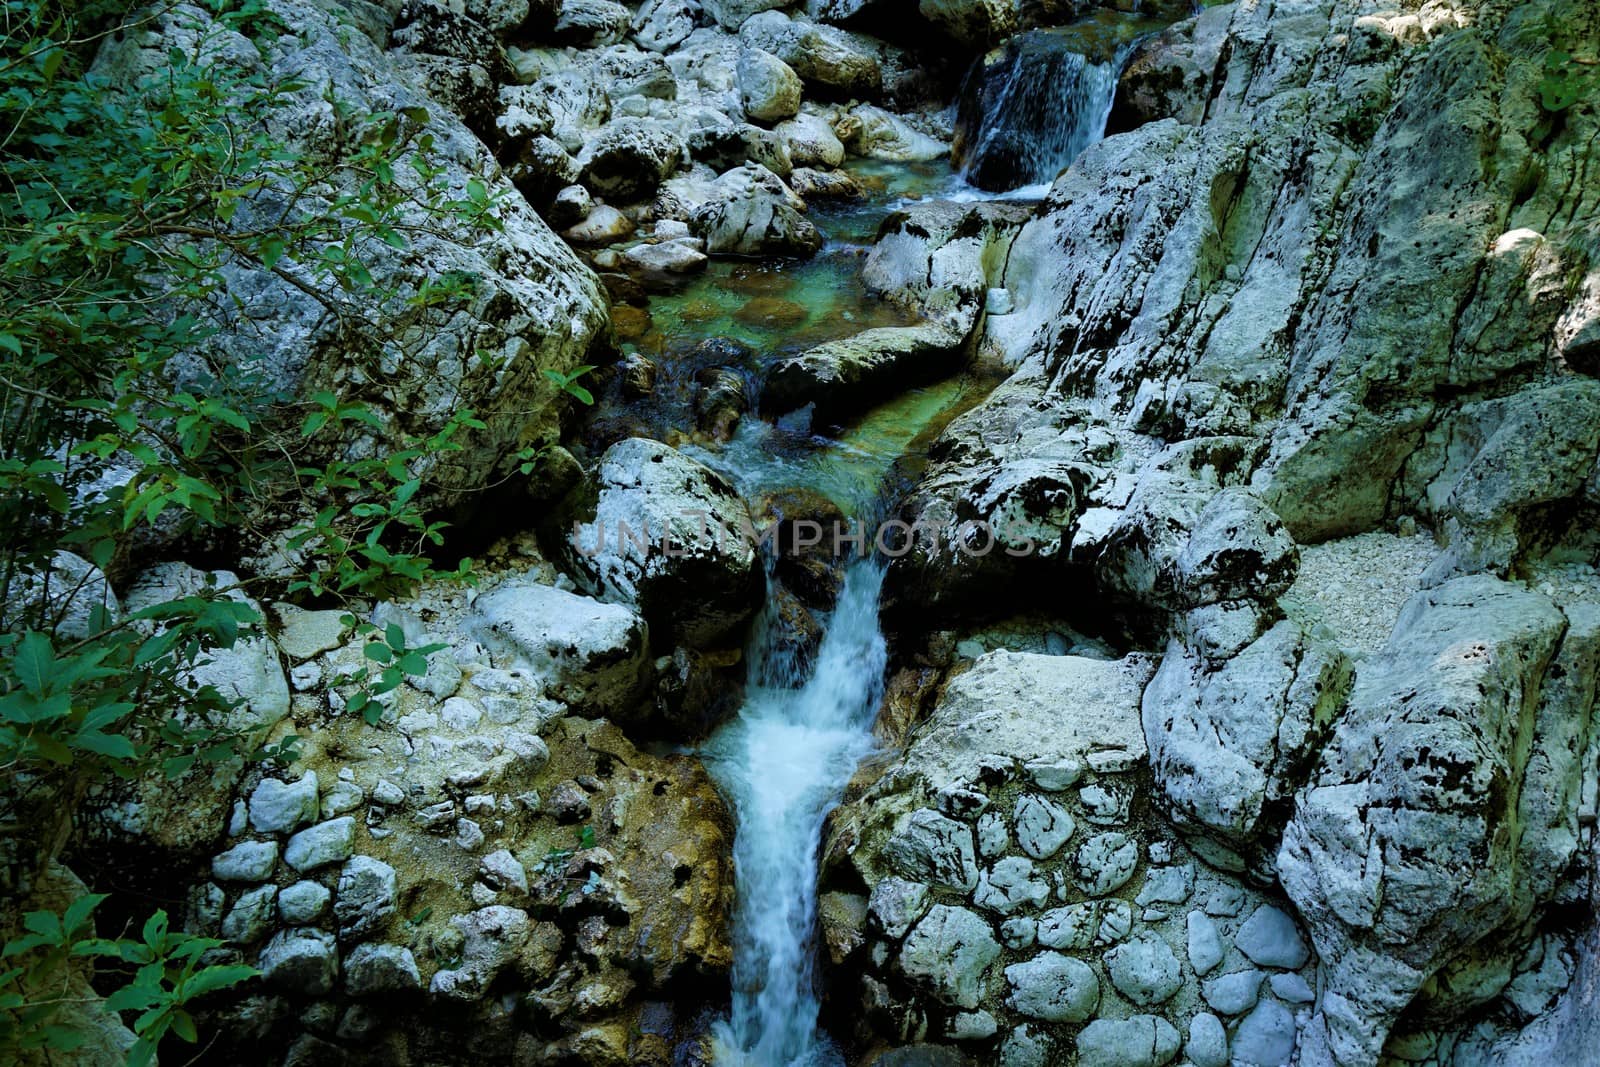 Savica near Savica falls, Slovenia by pisces2386